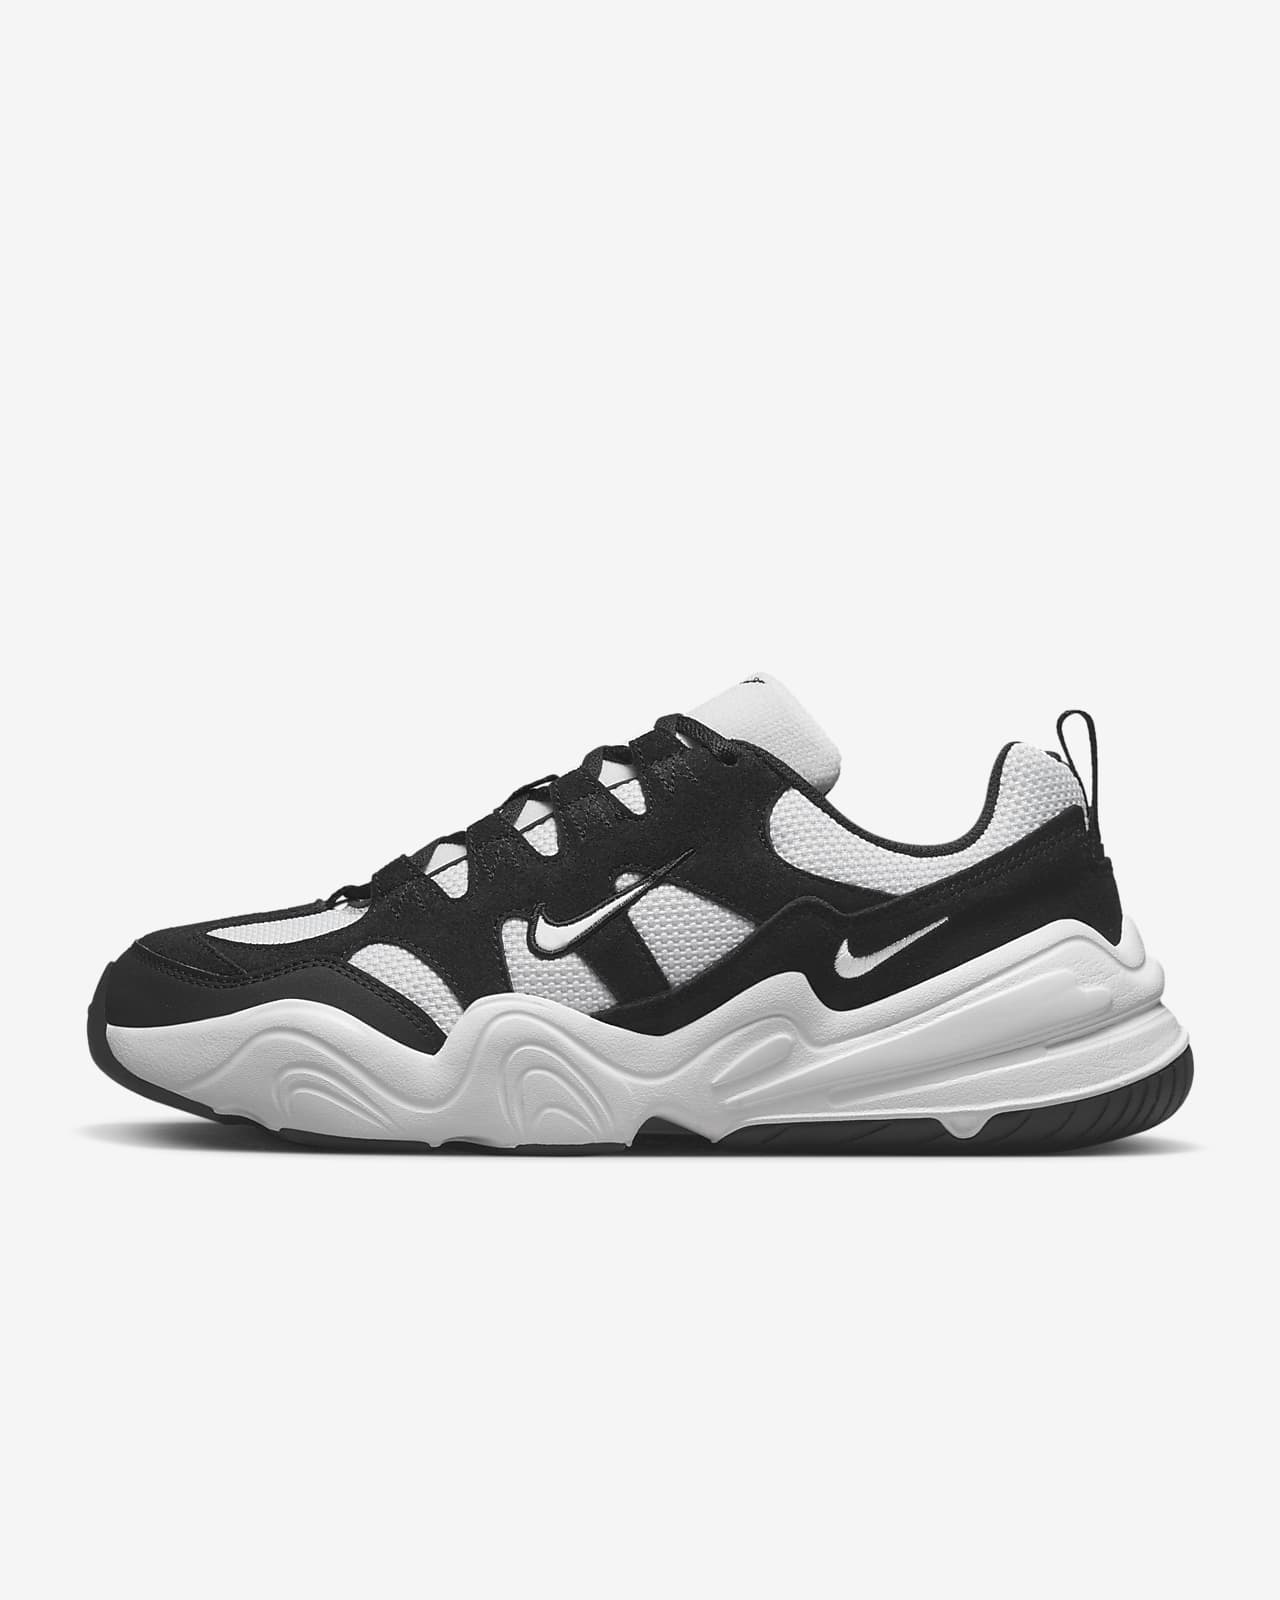 Men's shoes Nike Air Barrage Low Summit White/ Black